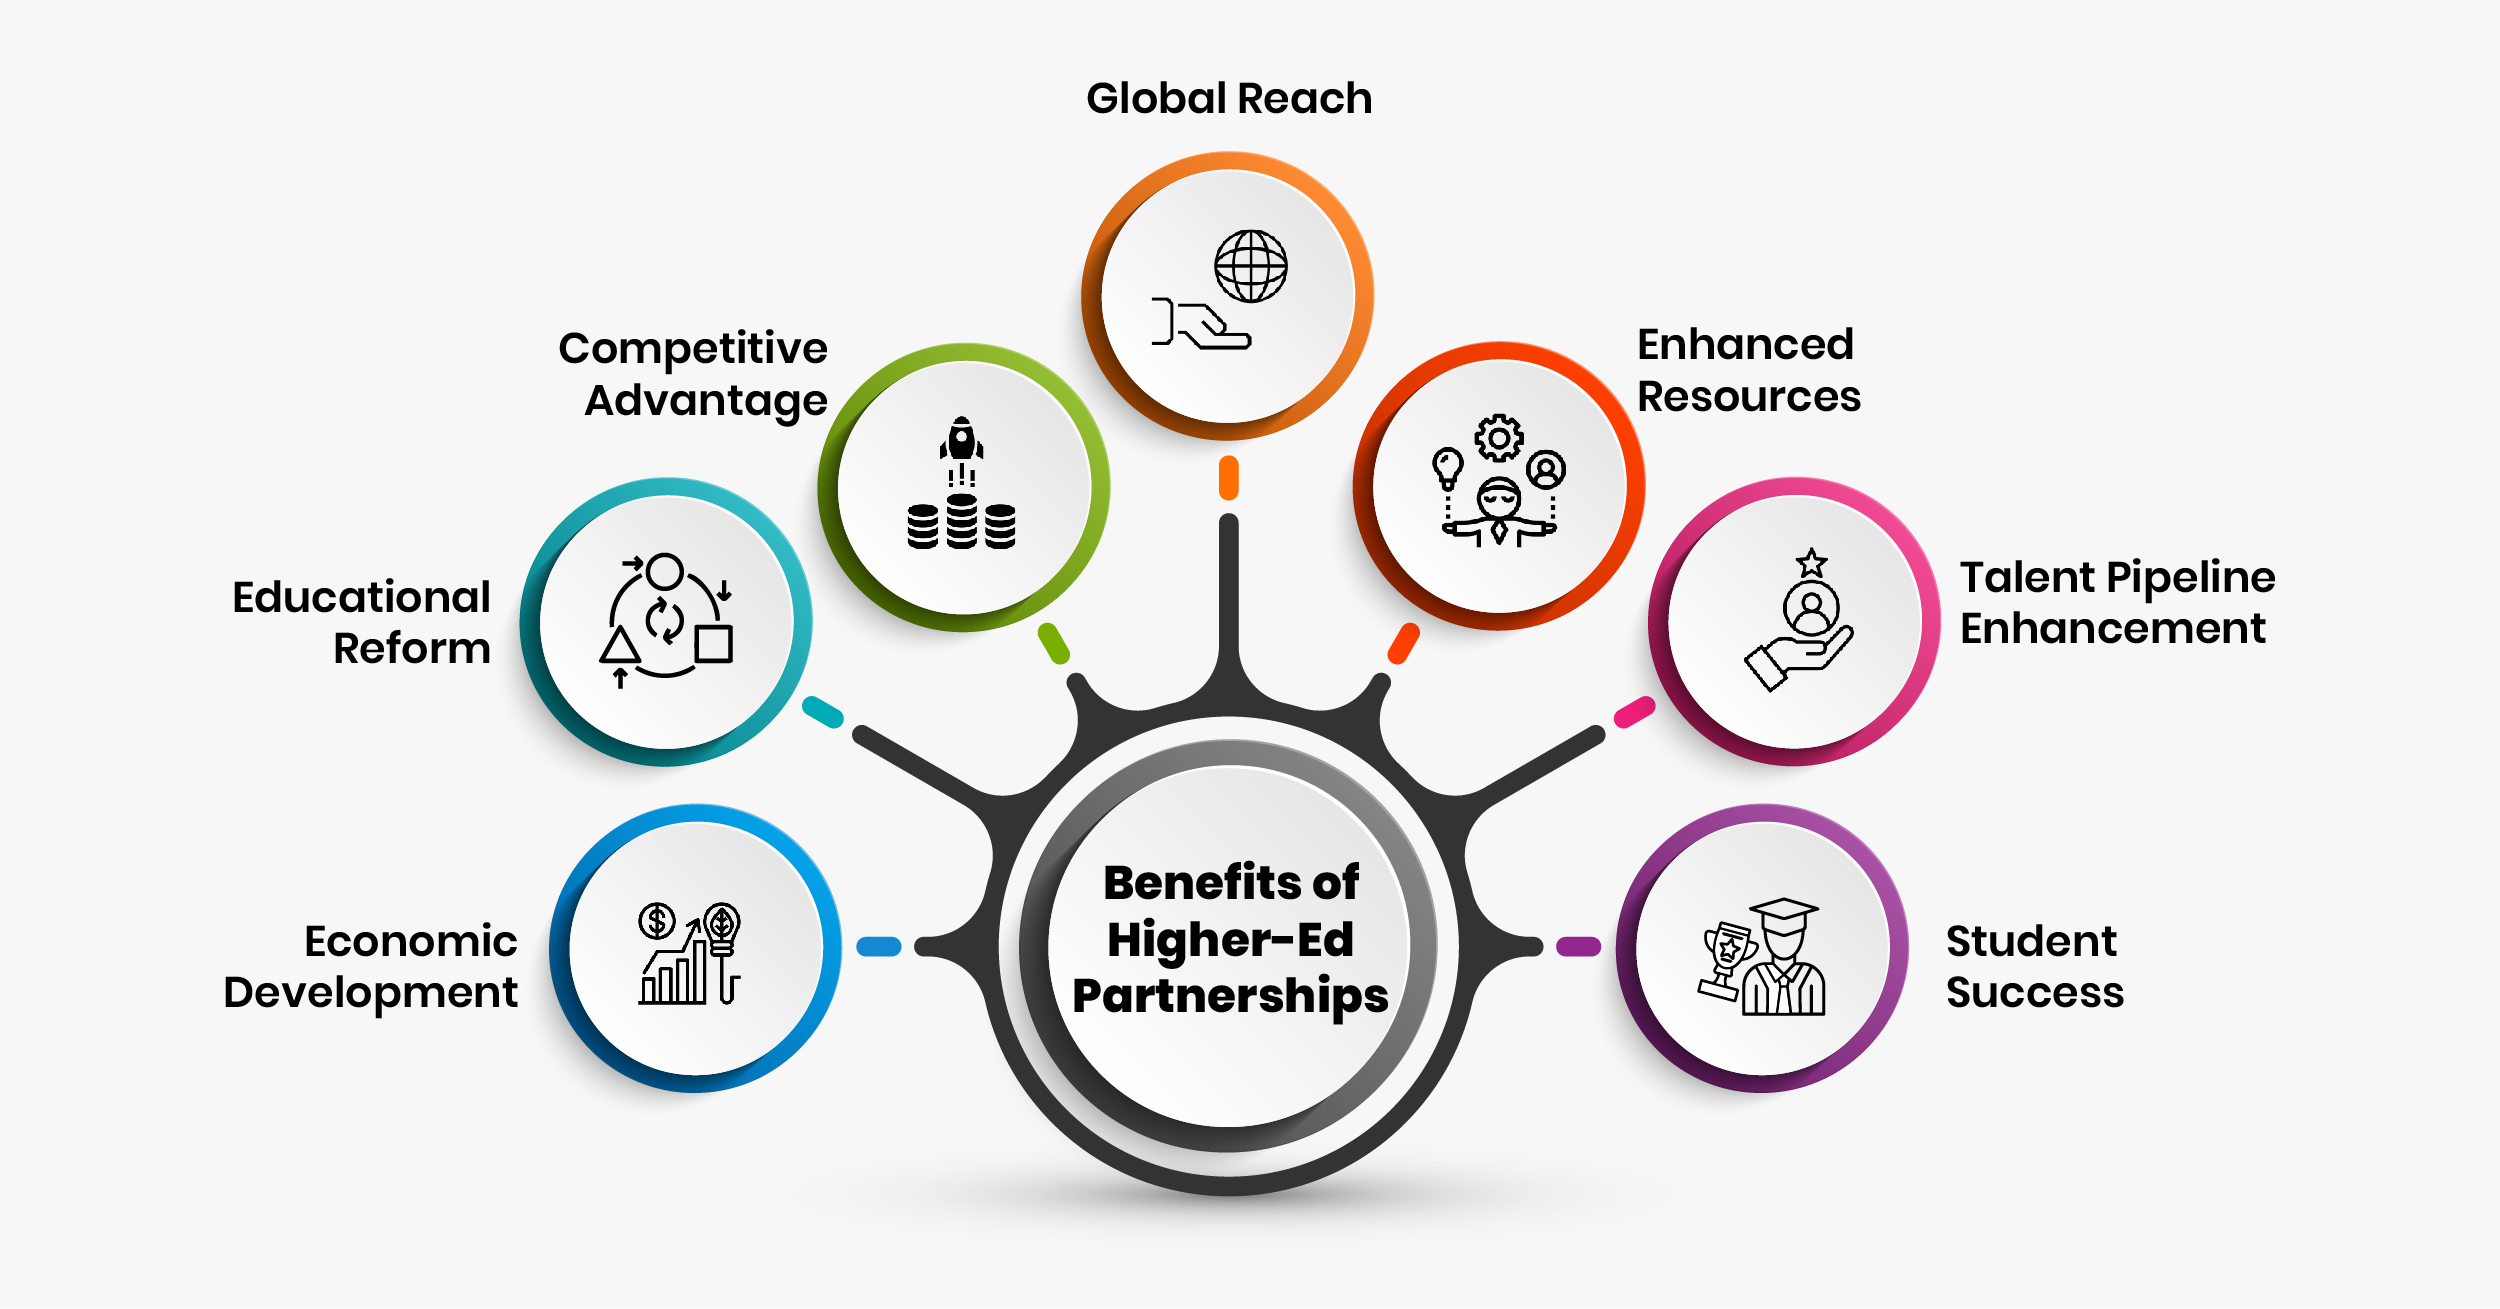 Benefits of Higher-Ed Partnerships